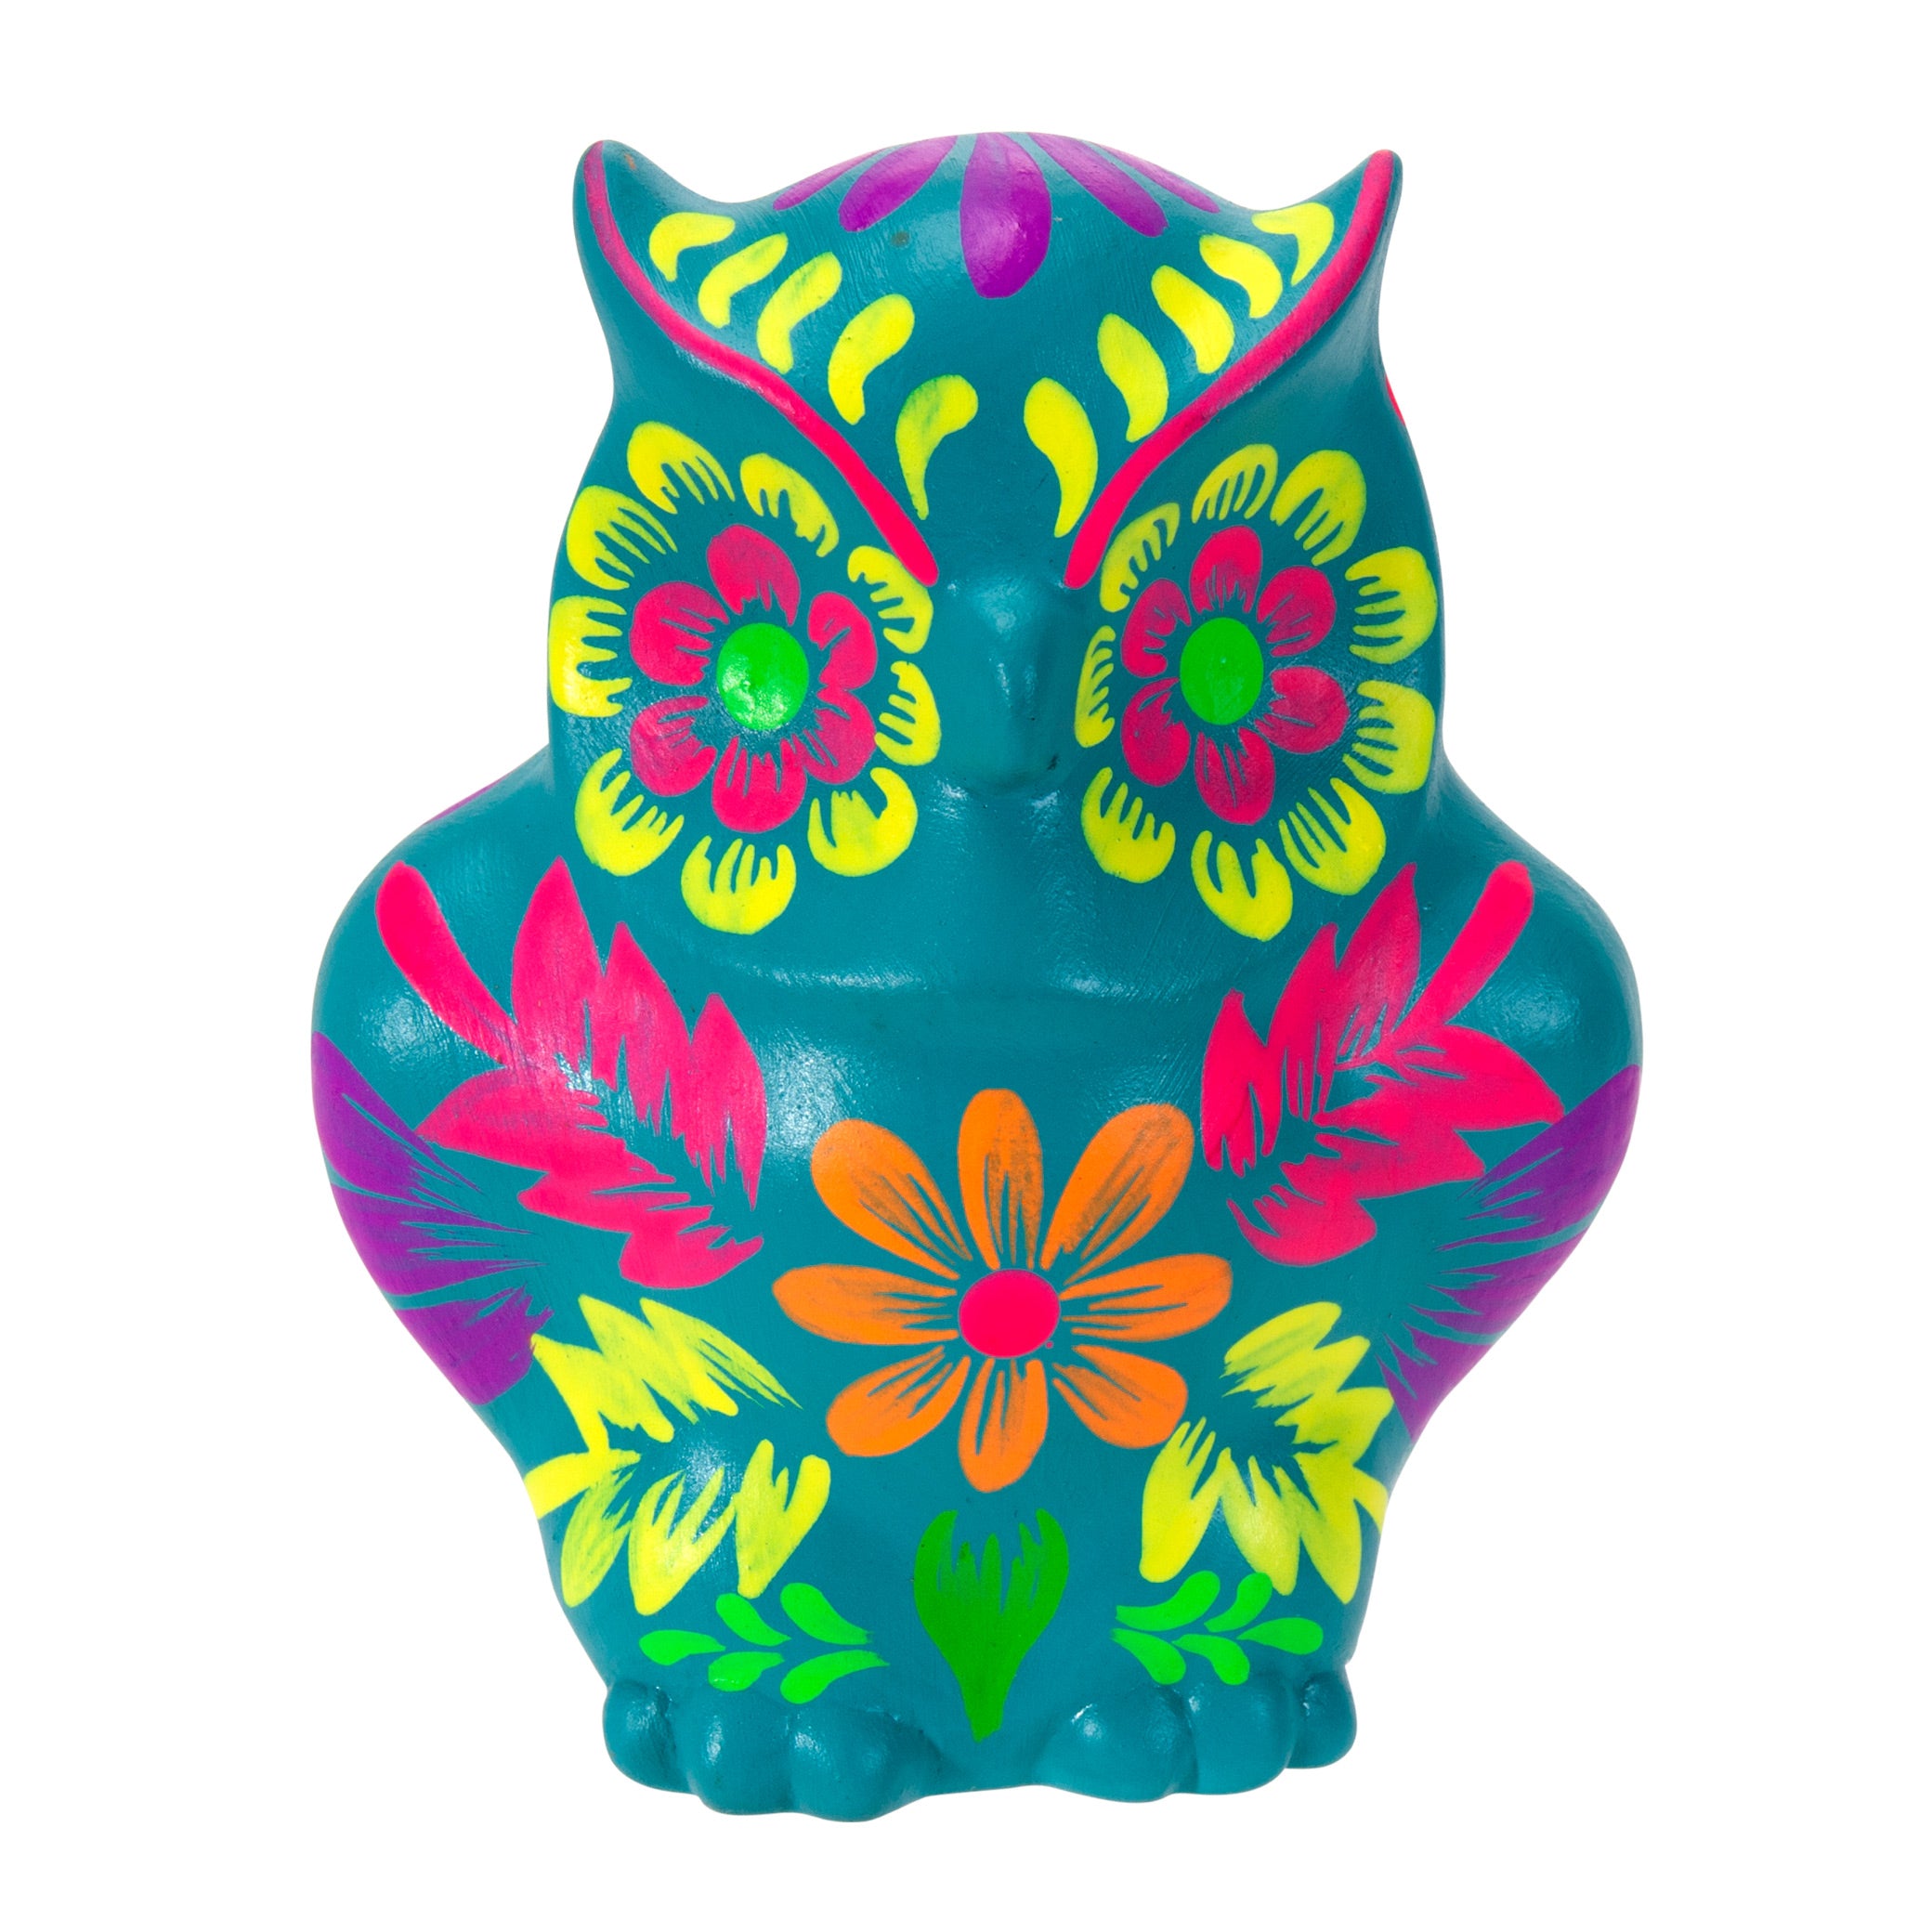 Fiesta Owl Teal - Small Ceramic Figurine